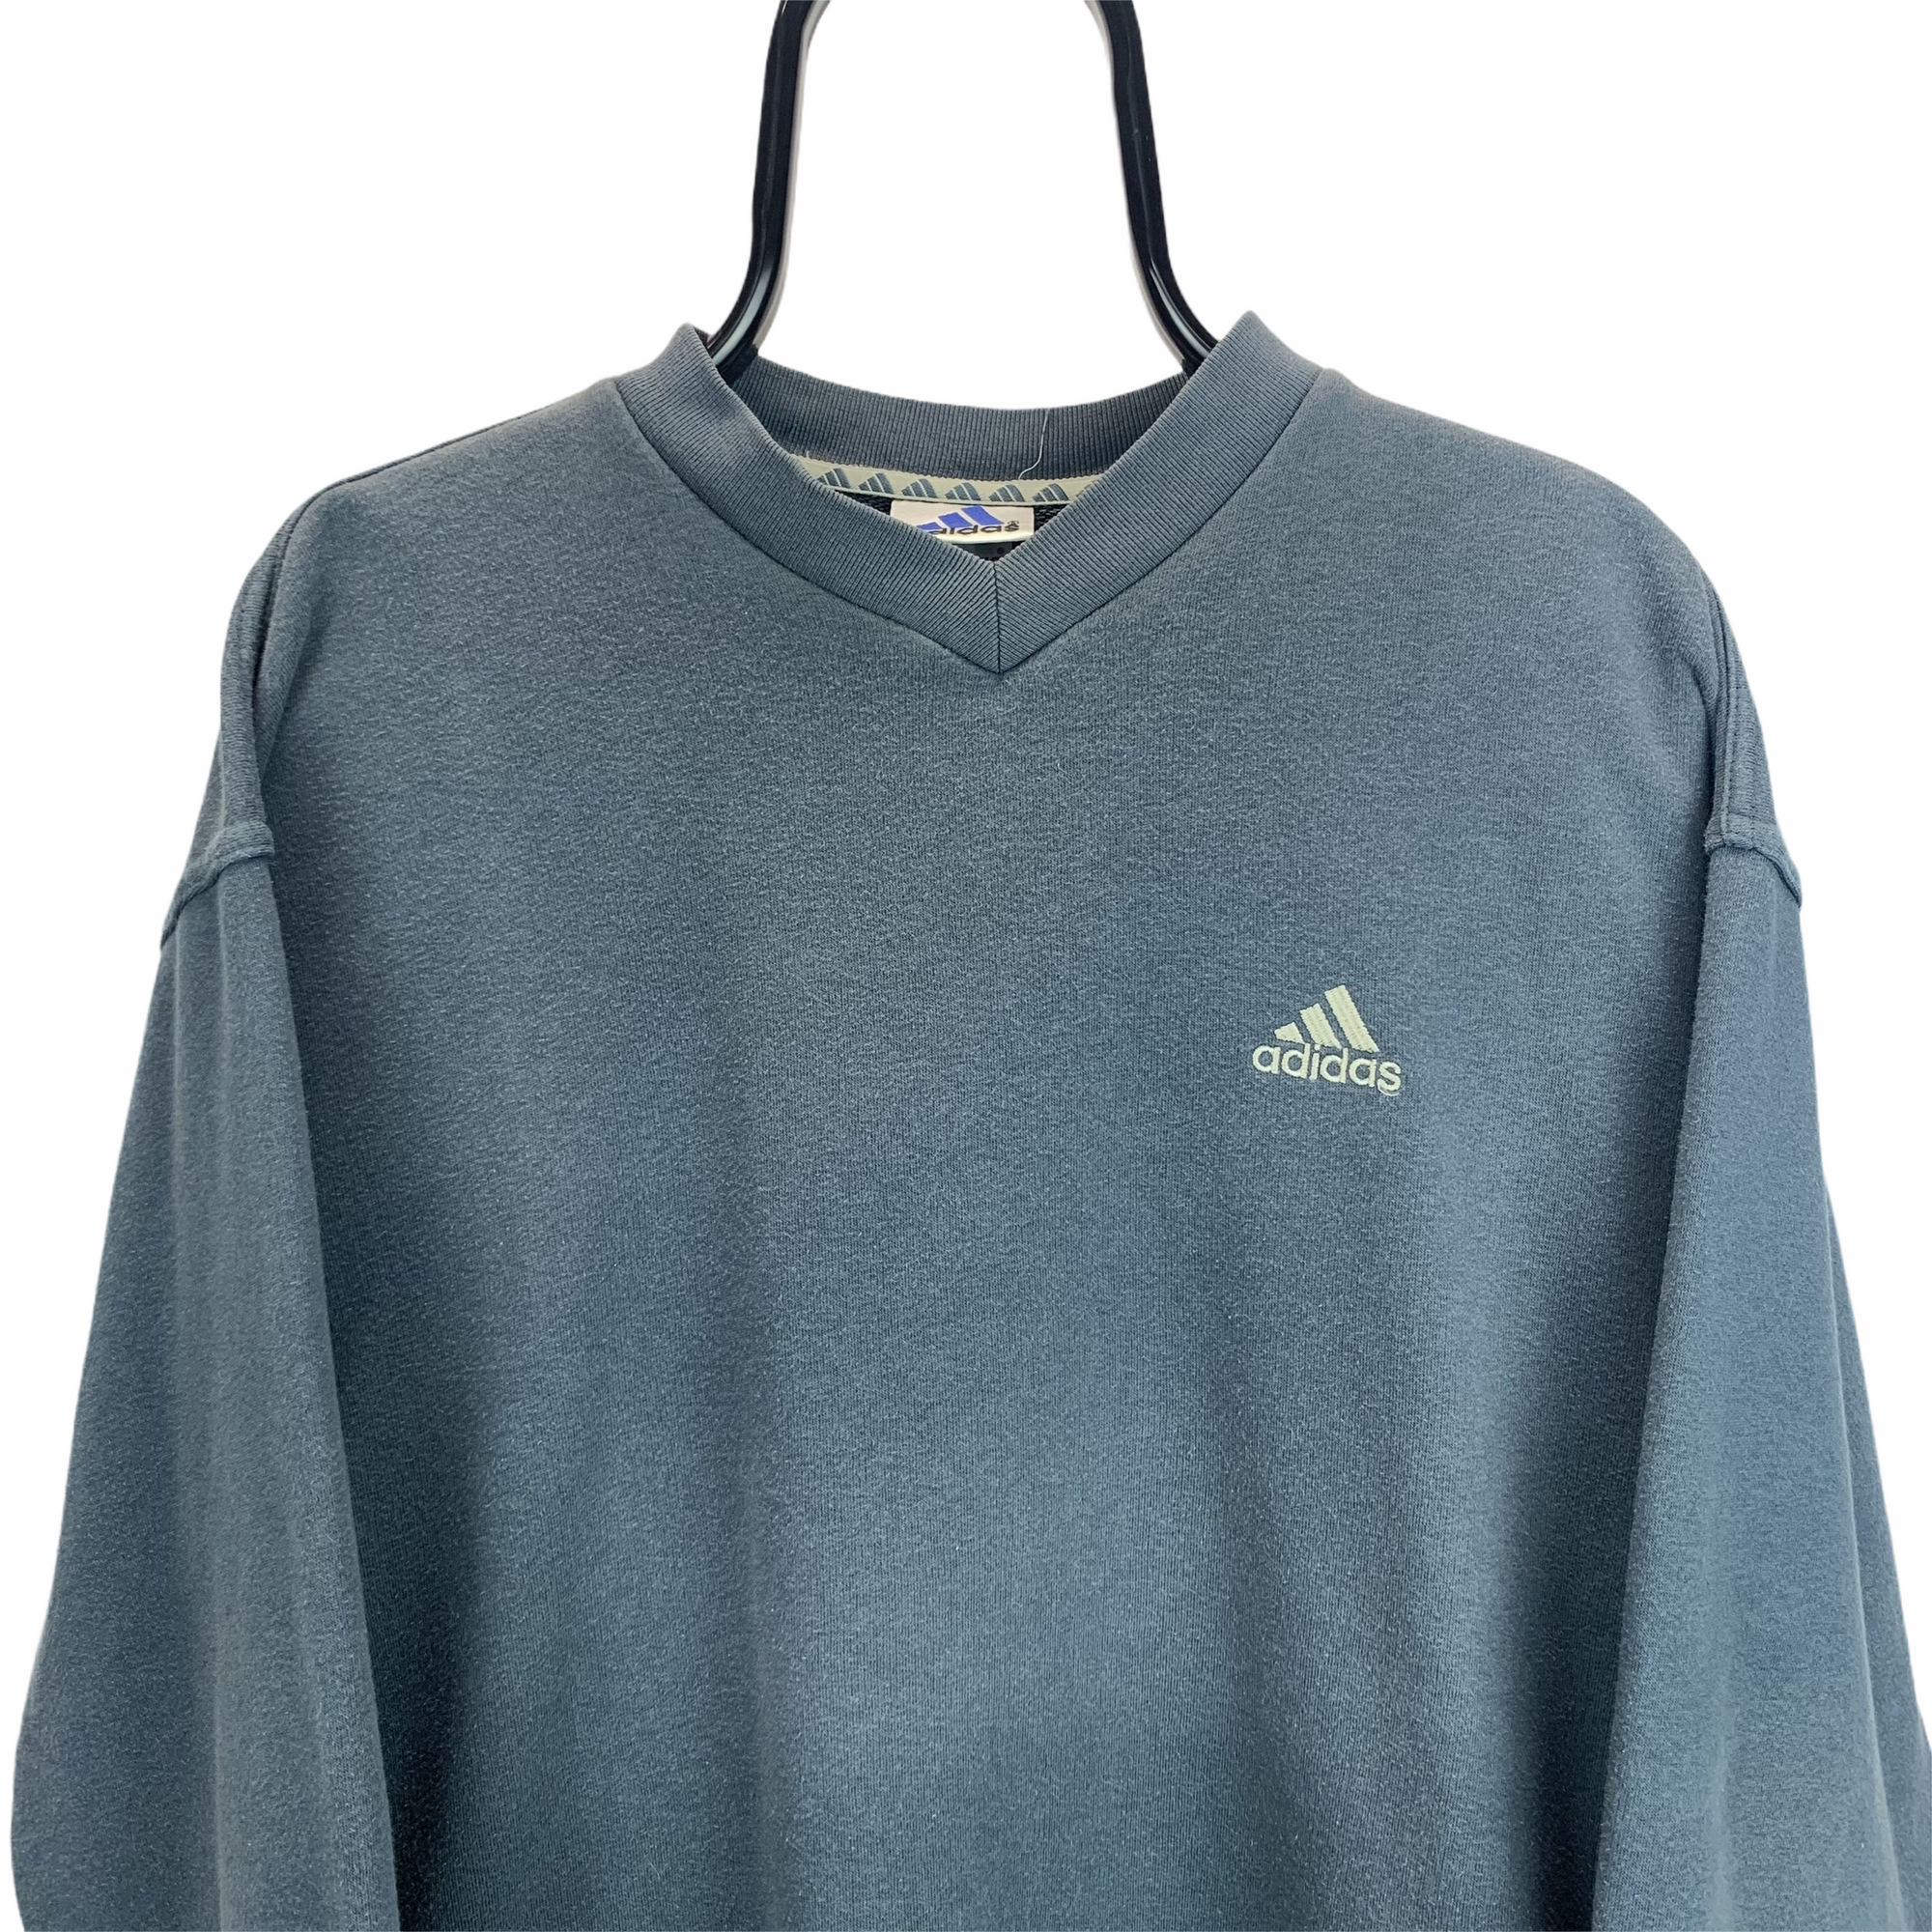 Vintage 90s Adidas Embroidered Small Logo Sweatshirt in Charcoal Logo - Men's Medium/Women's Large